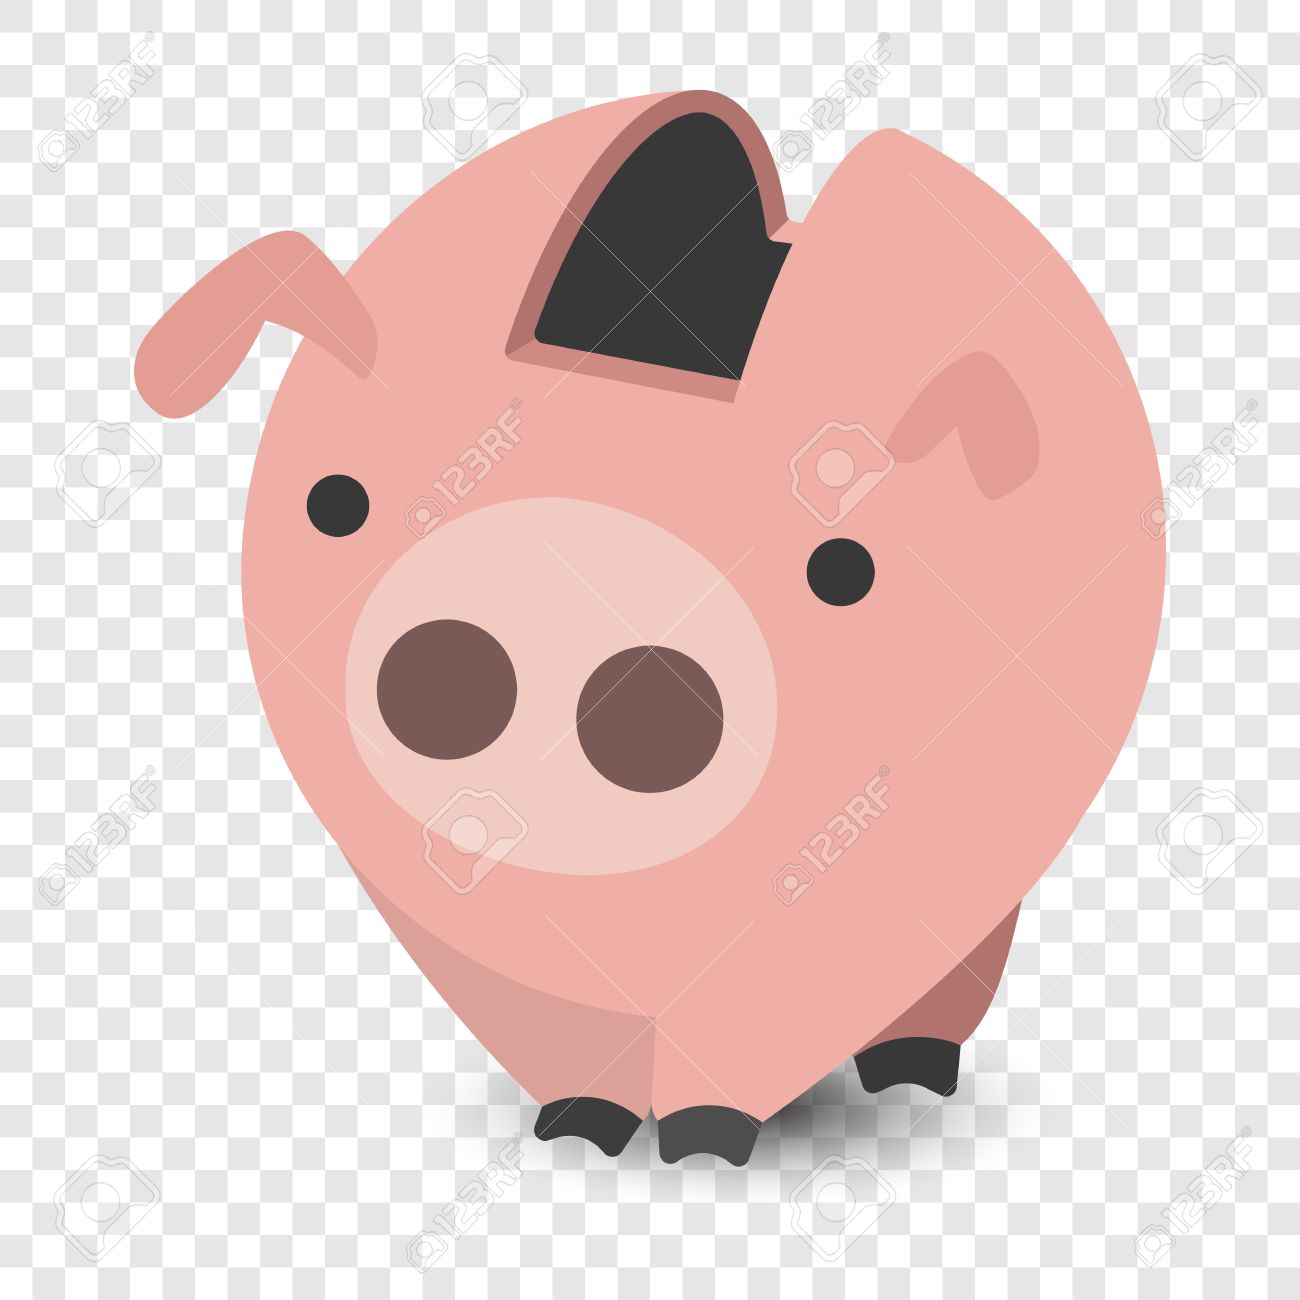 Piggy Bank Cartoon Illustration On Transparent Background Royalty